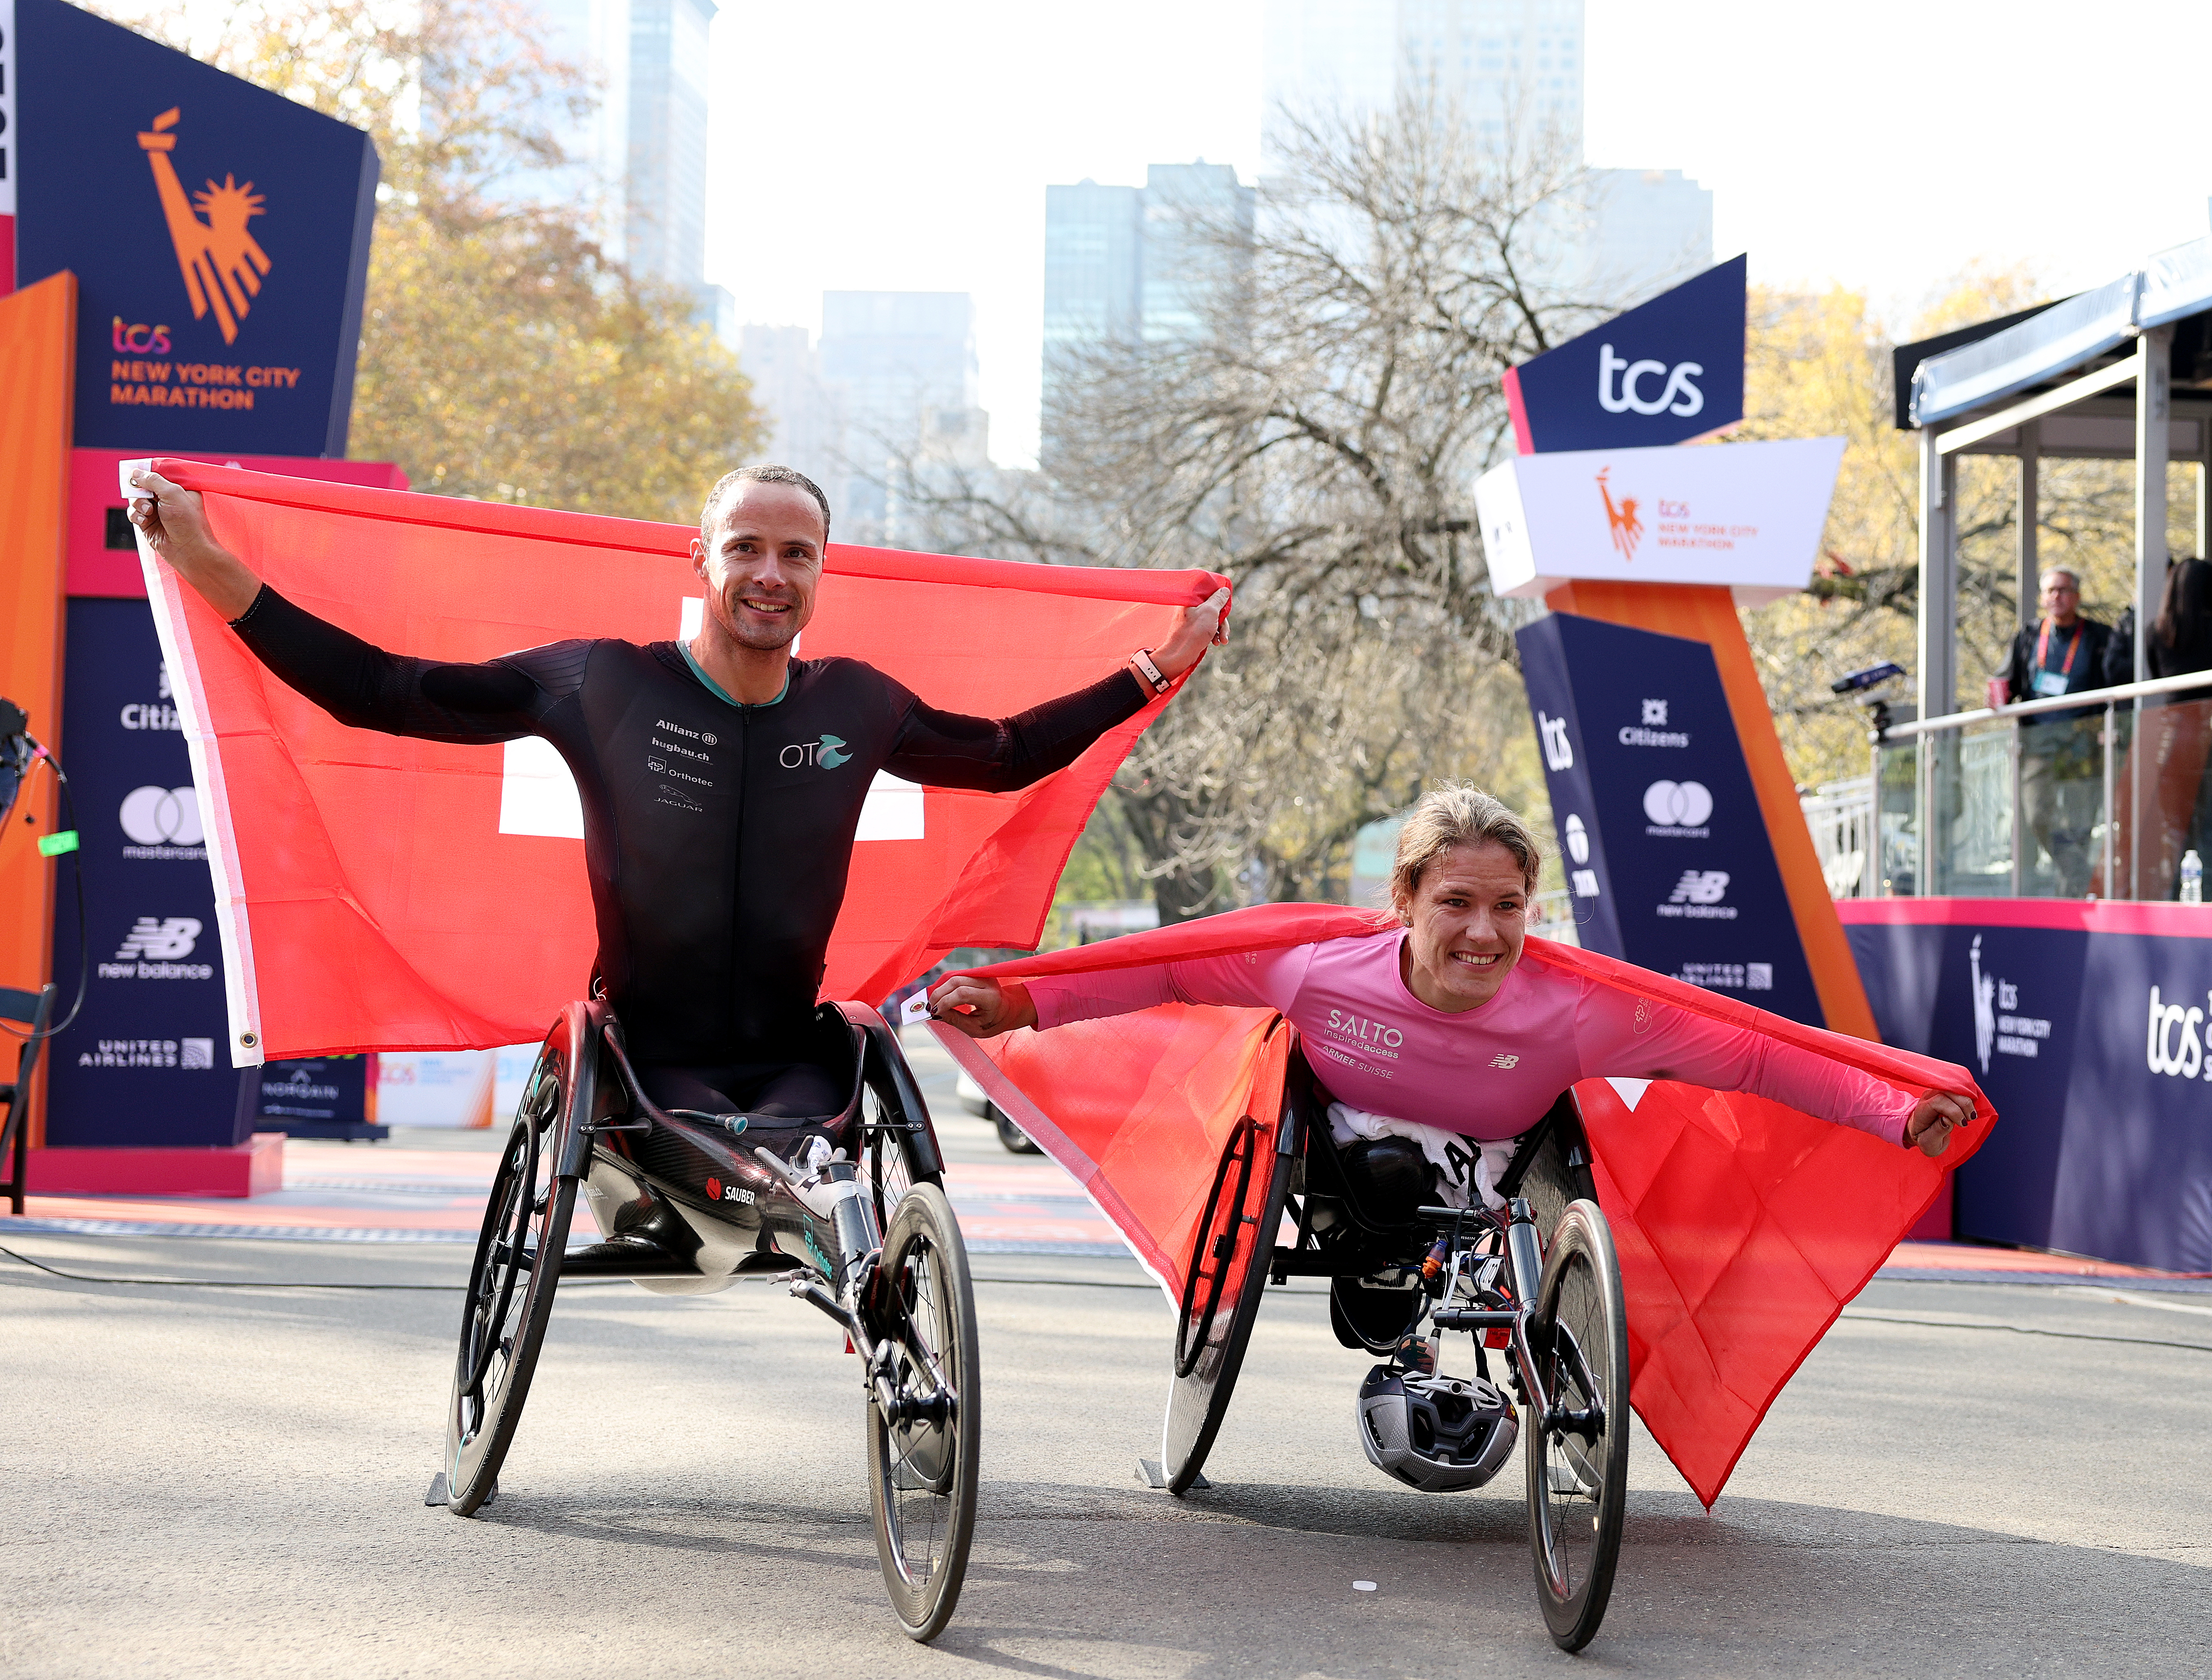 Marcel Hug (L) and Catherine Debrunner of Switzerland celebrate after winning the New York City Marathon men's and women's wheelchair races, respectively, in New York City, November 5, 2023. /CFP